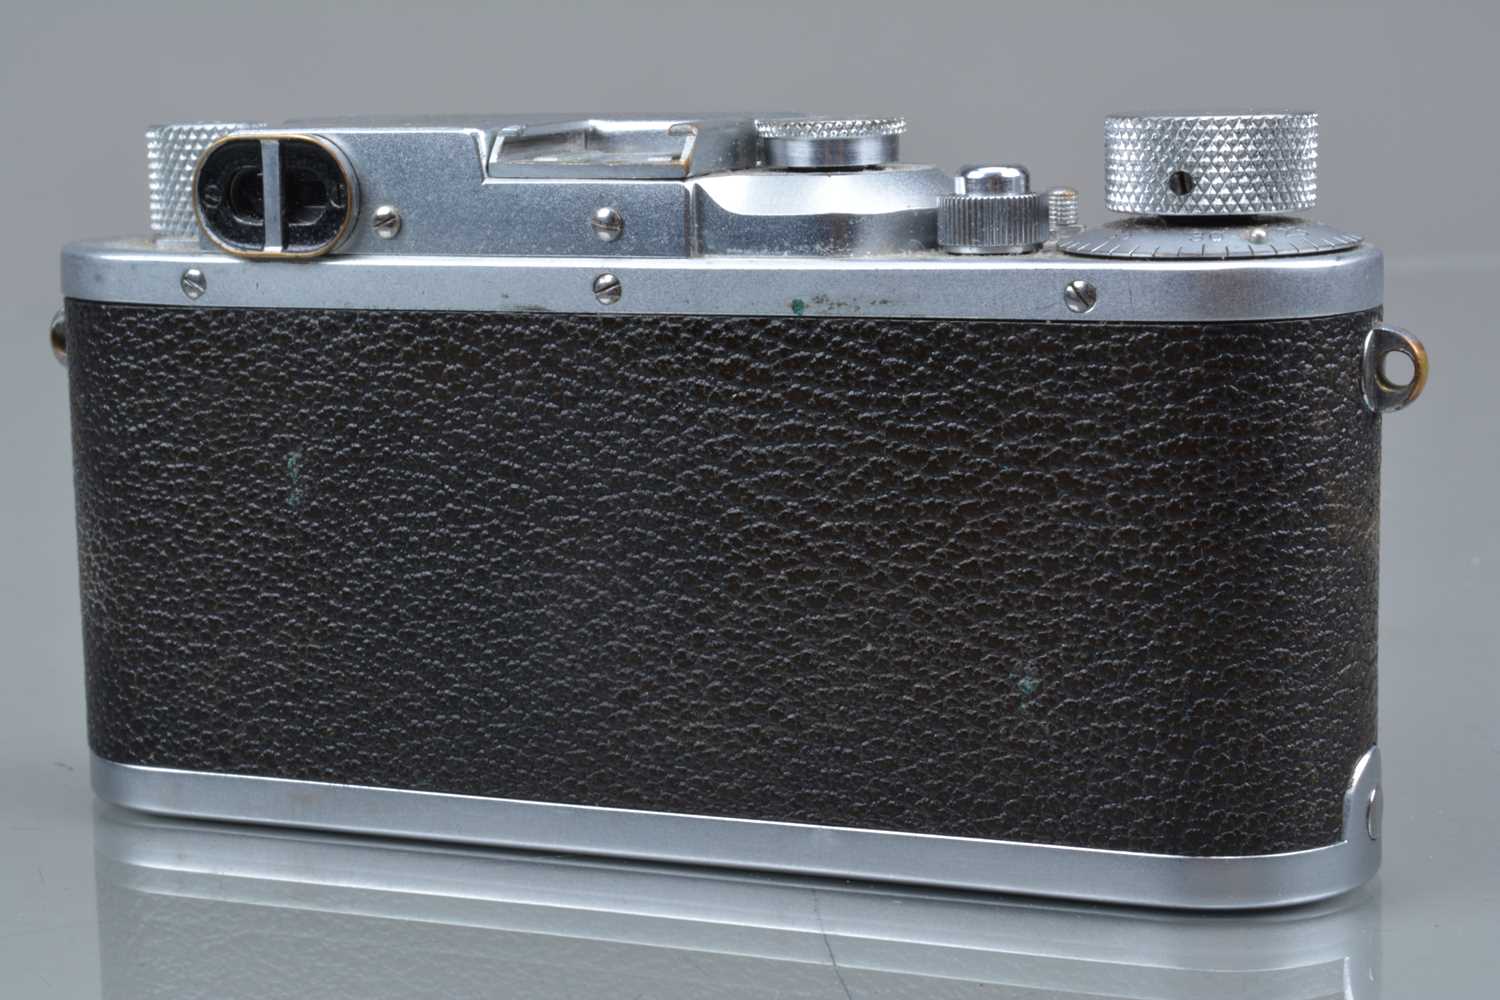 A Leitz Wetzlar Leica IIIb Model G Rangefinder Camera body, - Image 2 of 3